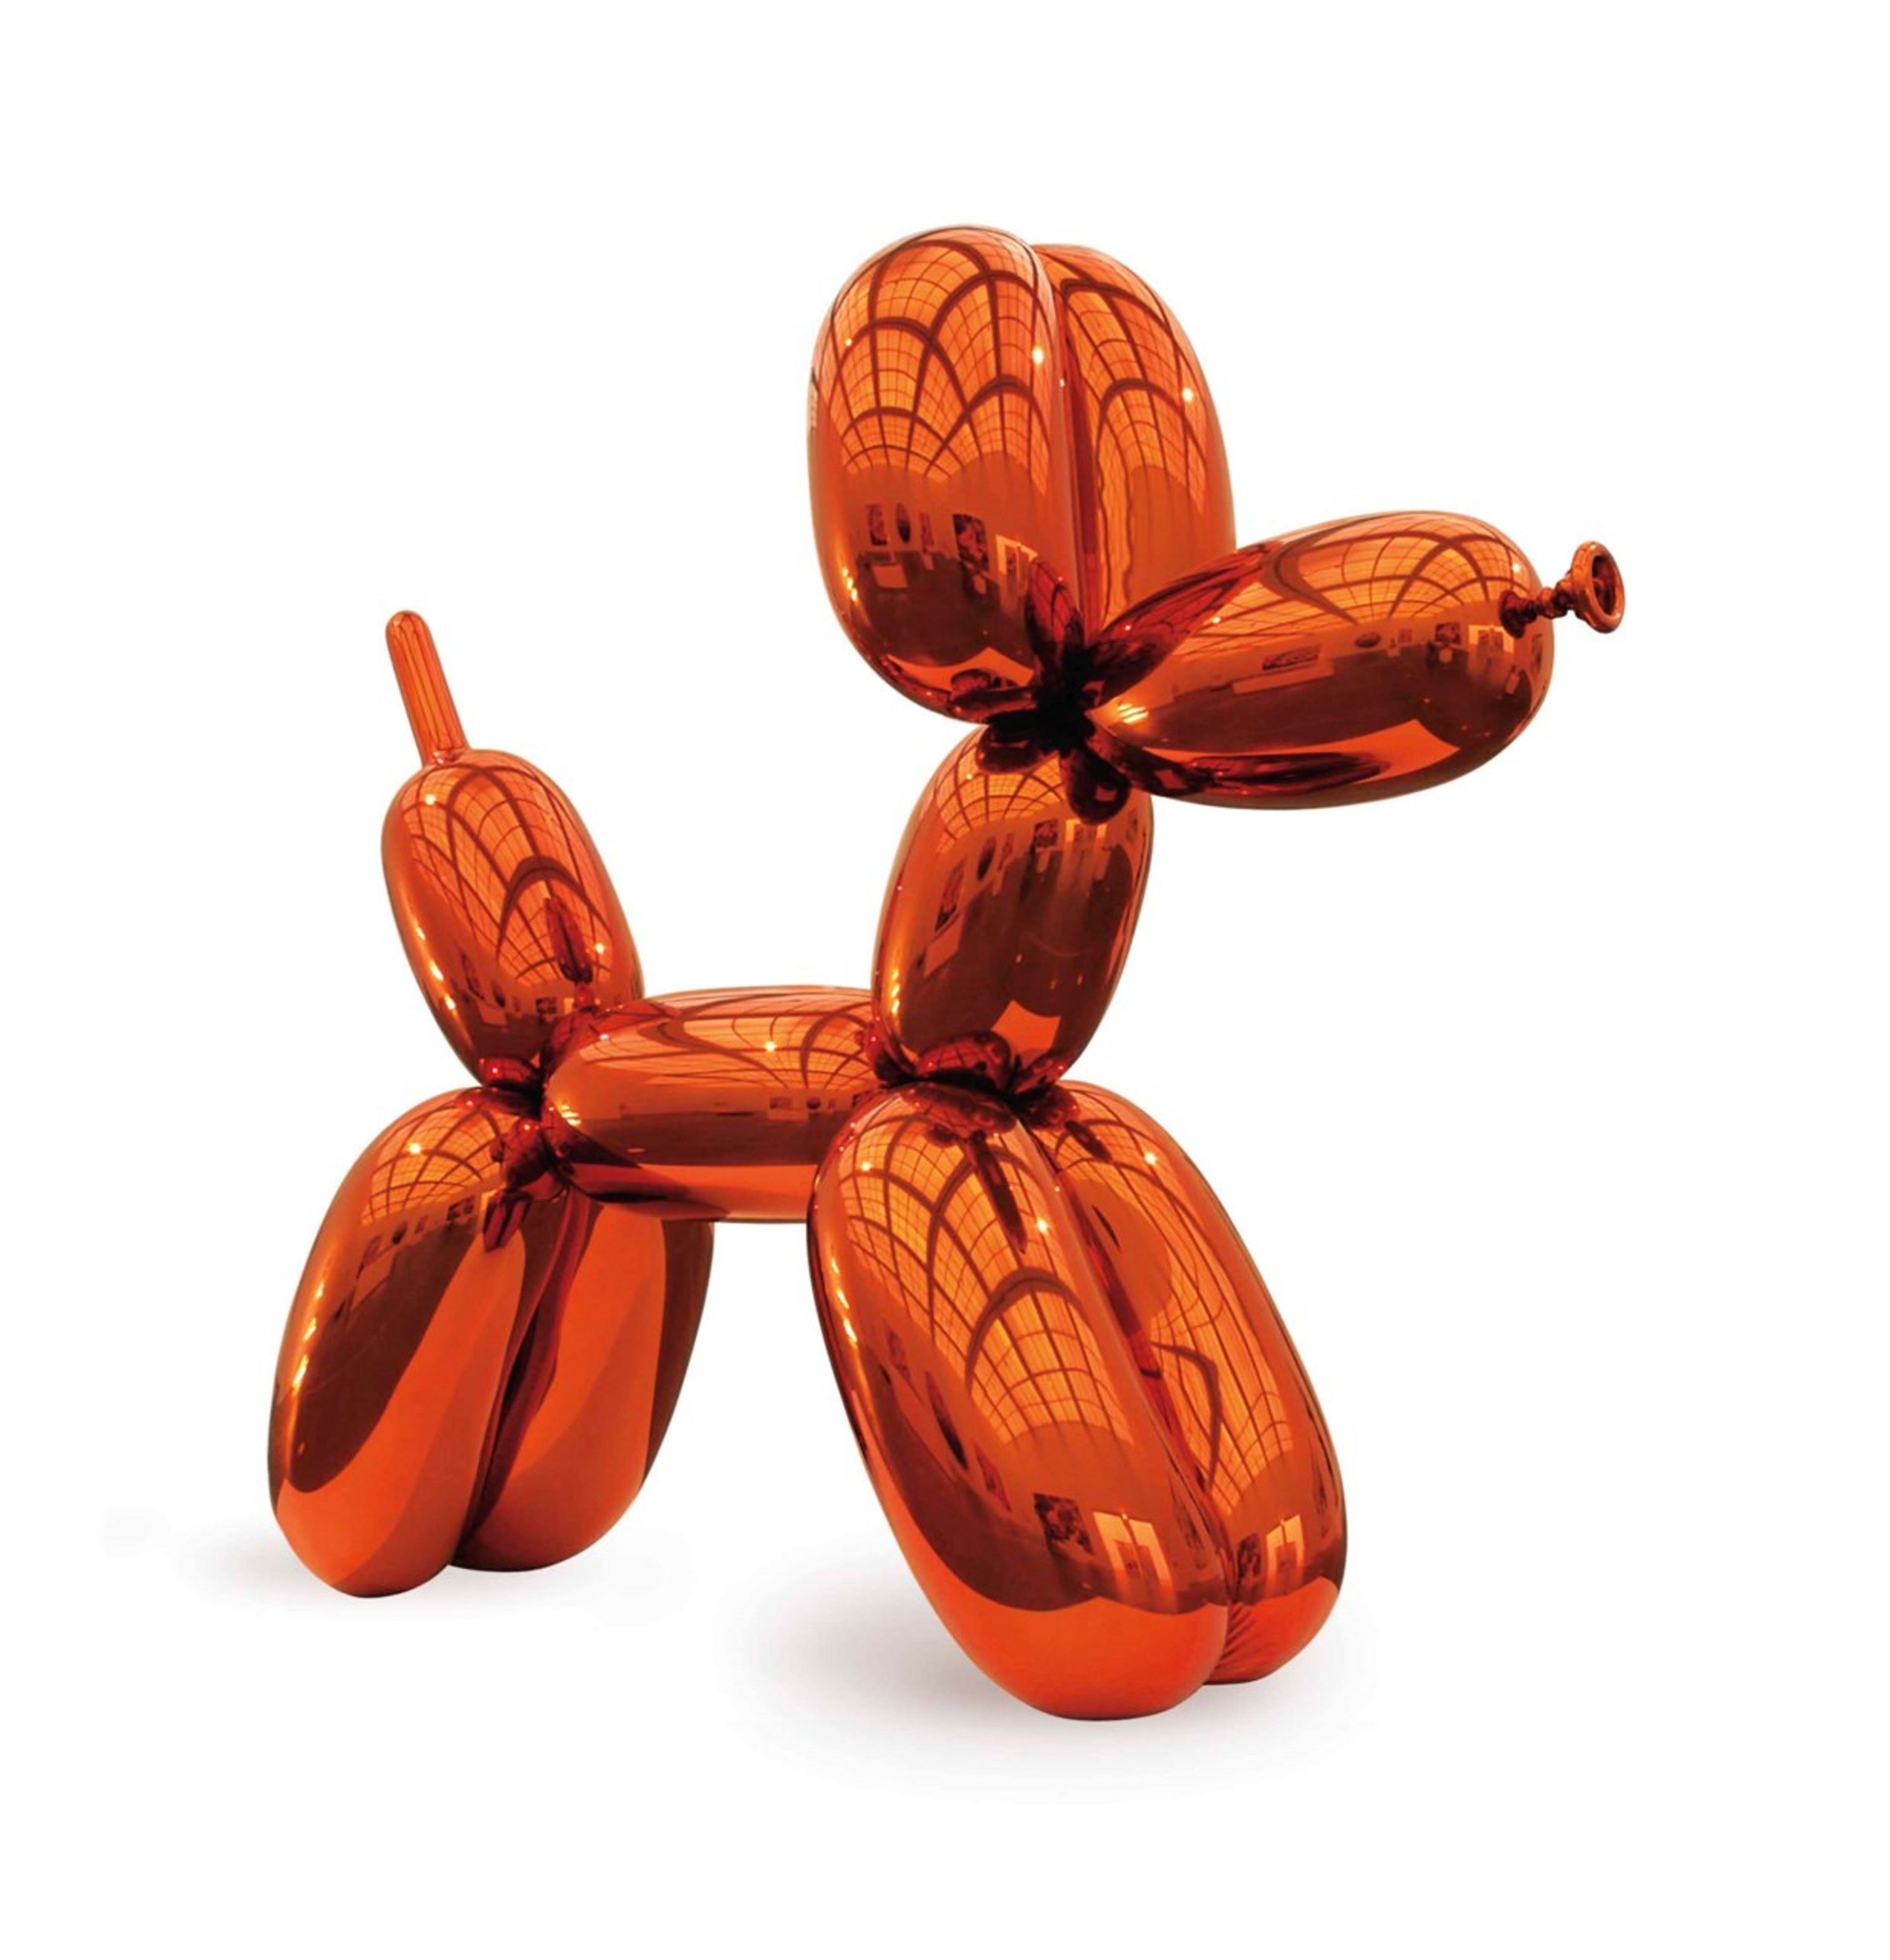 Balloon Dog (orange) by Jeff Koons